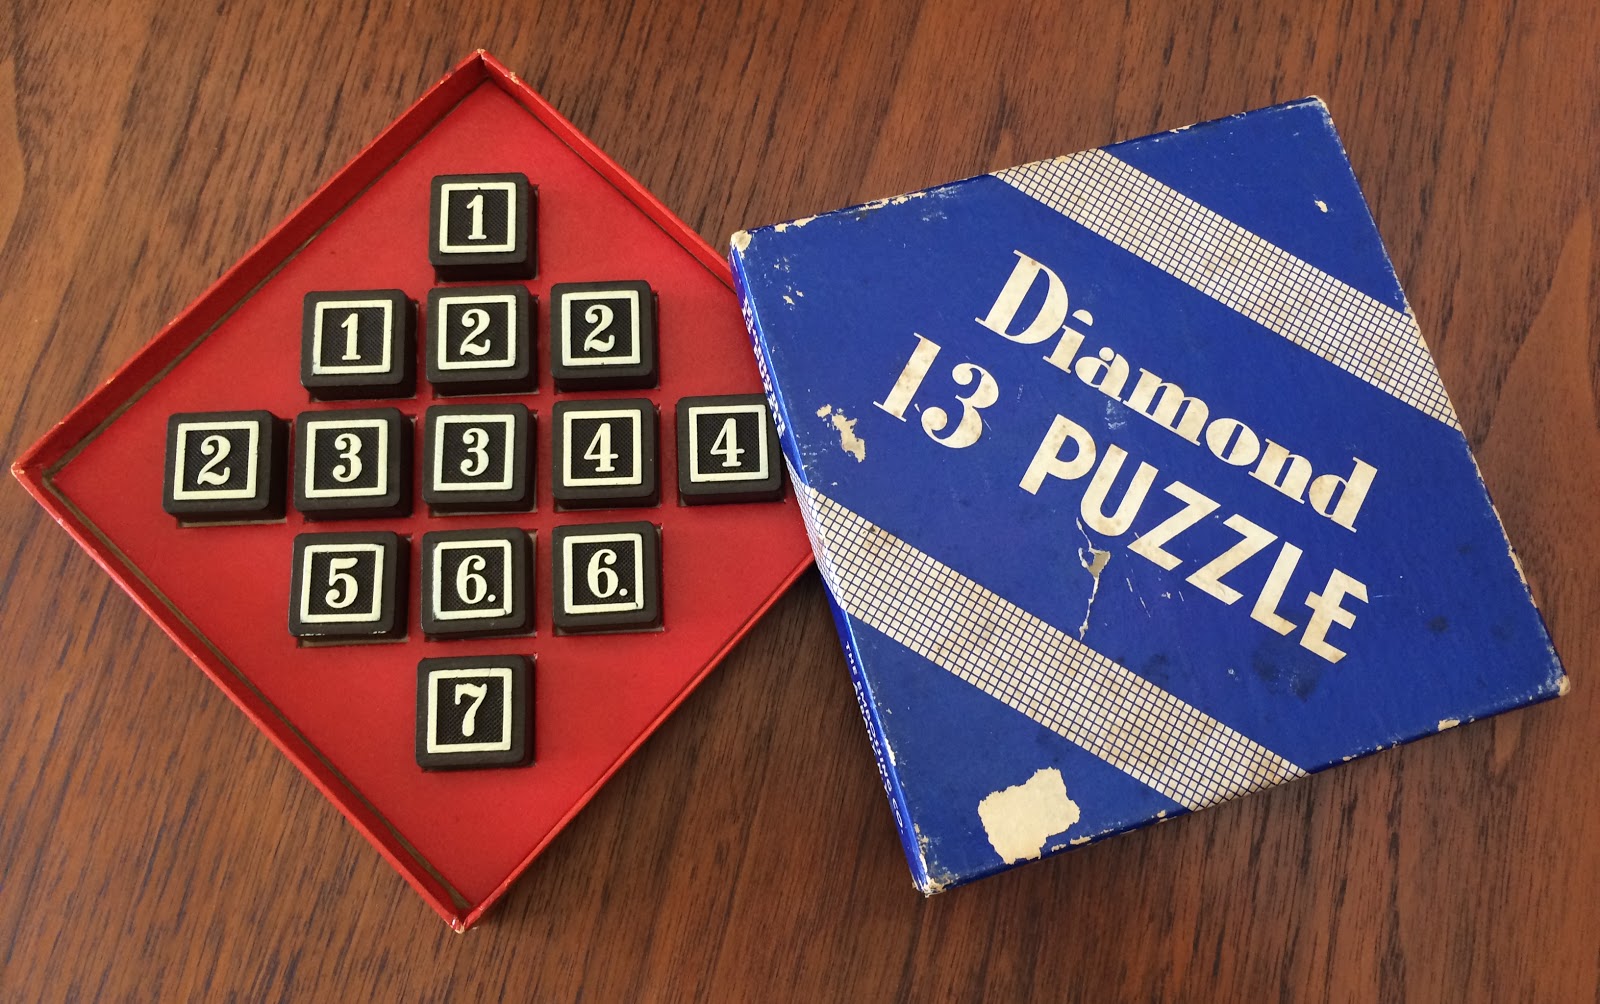 PuzzleMad: The Diamond 13 Puzzle